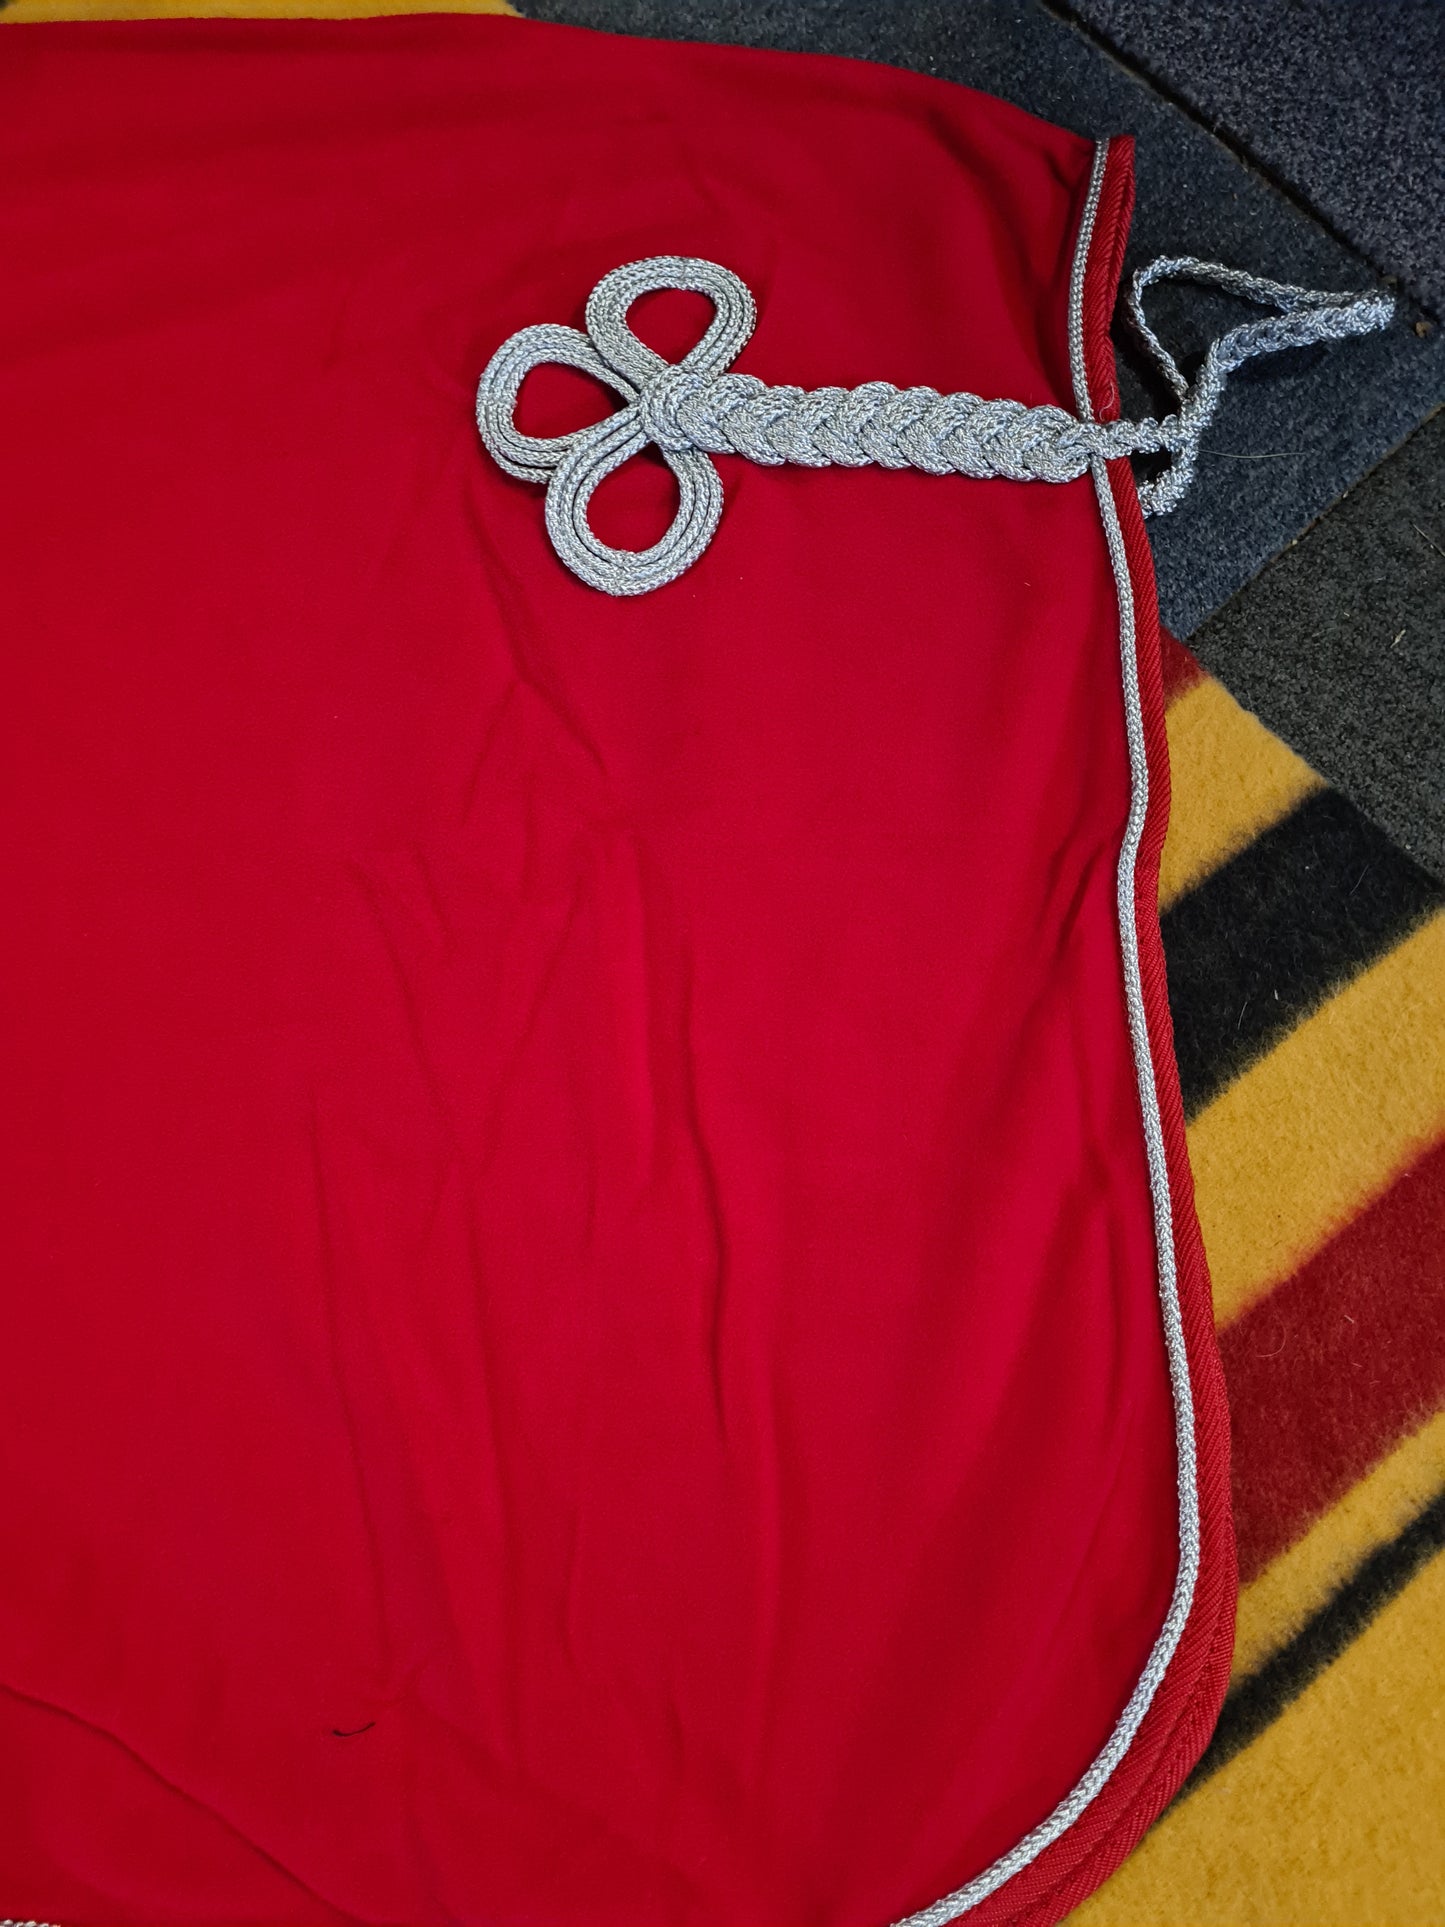 NEW rhinegold elite show/travel fleece red sizes 5'6 to 7'3 FREE POSTAGE 🟢